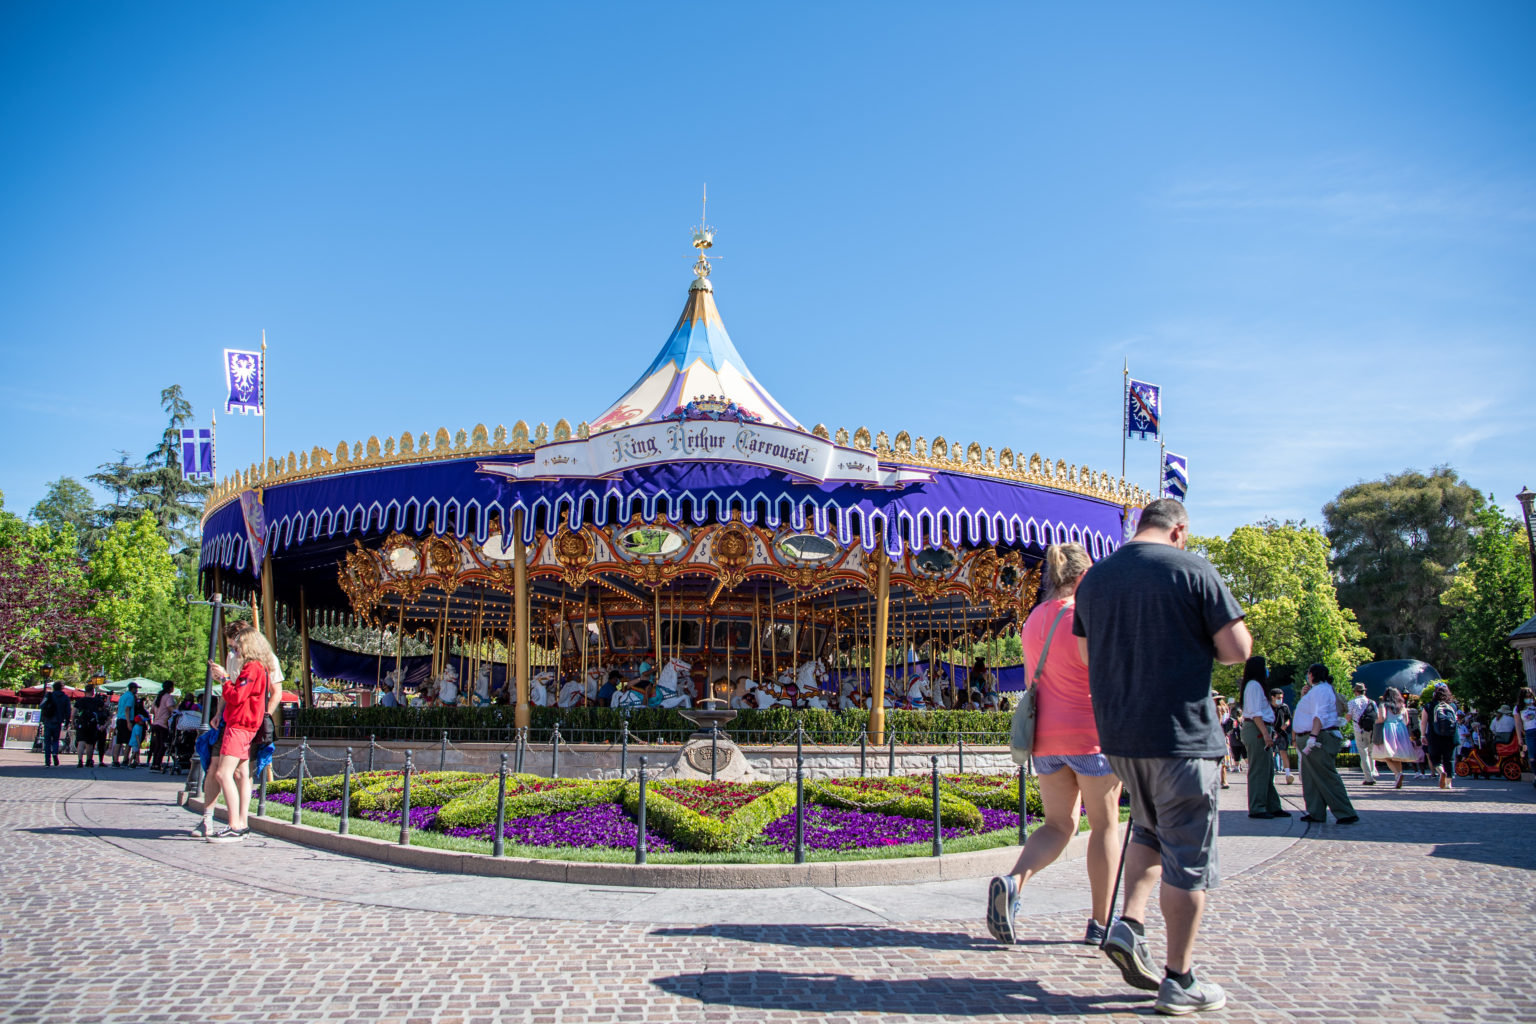 Guests Arrive in Fantasyland as Disneyland Park Reopens